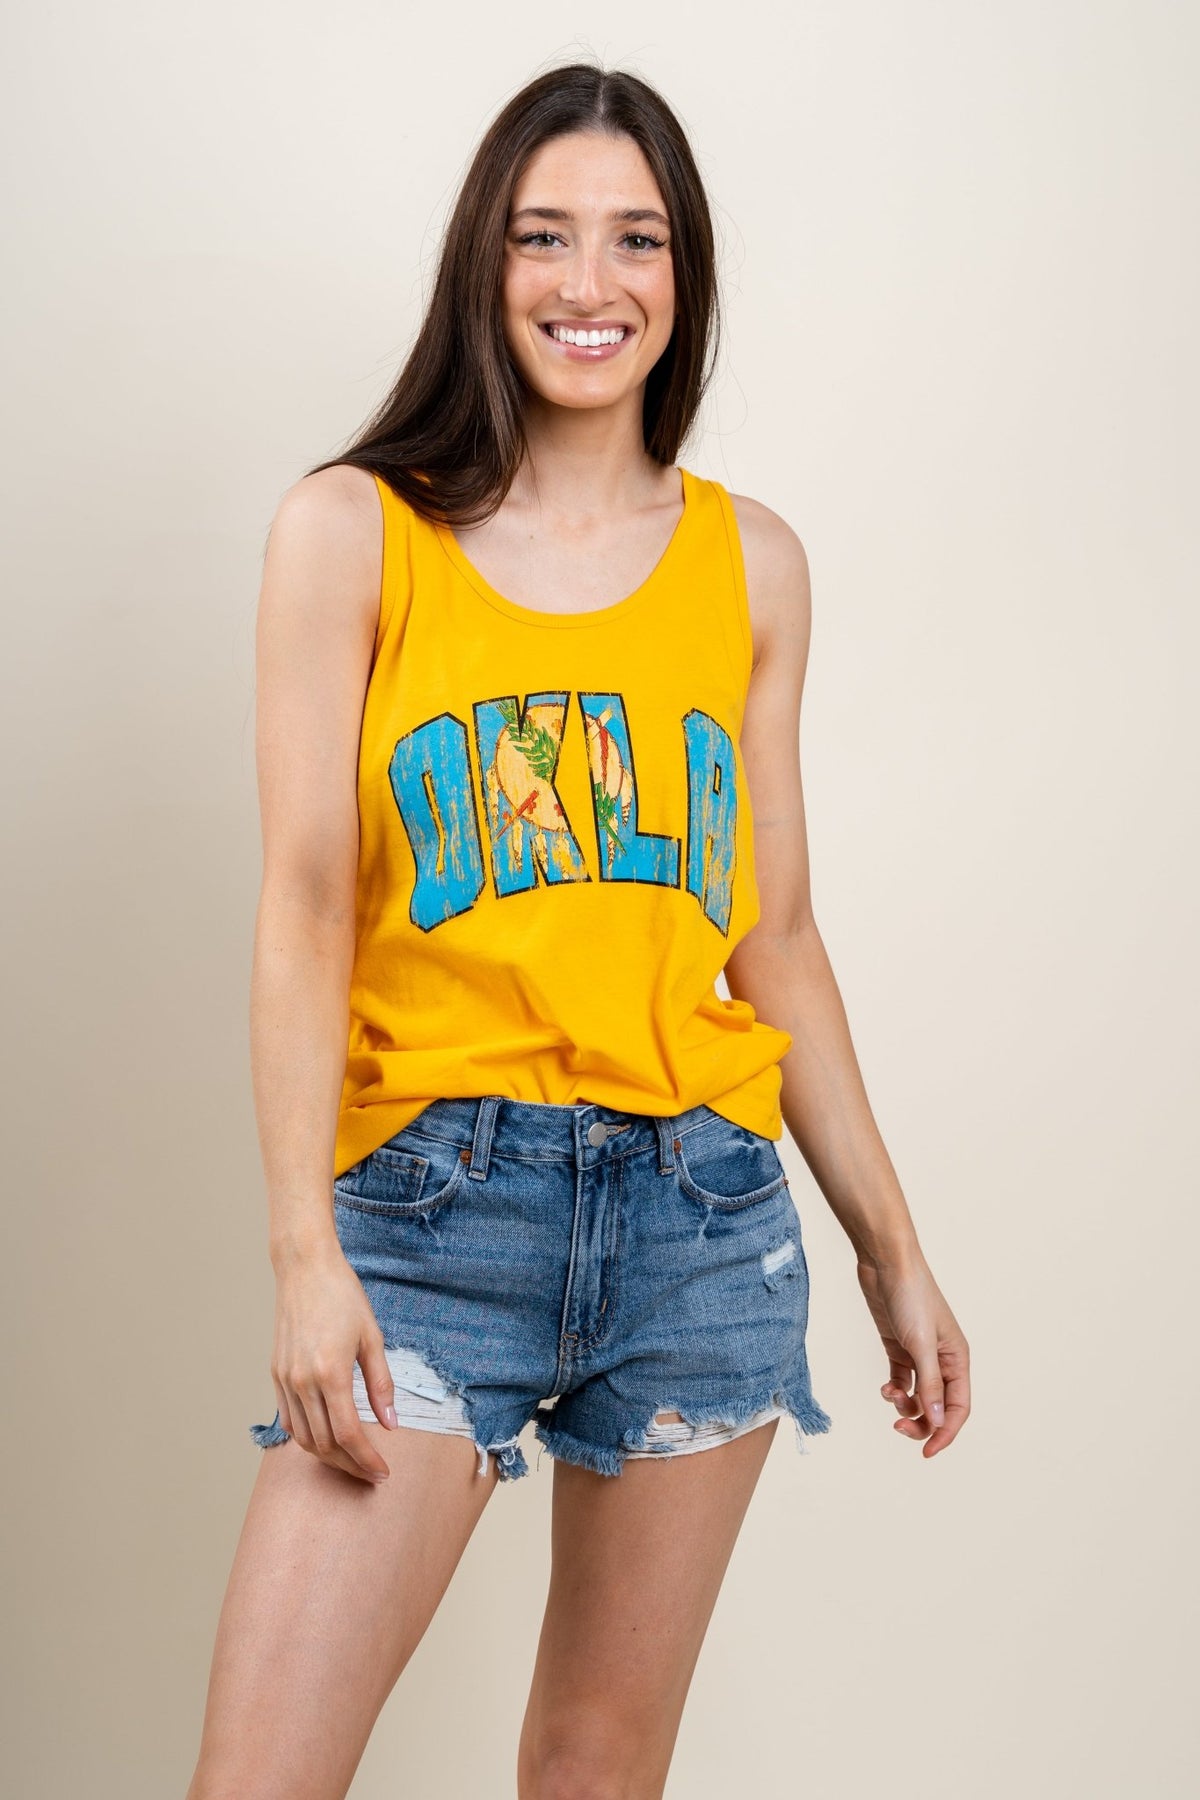 Okla flag tank top mustard - Cute t-shirt - Trendy Tank Tops at Lush Fashion Lounge Boutique in Oklahoma City